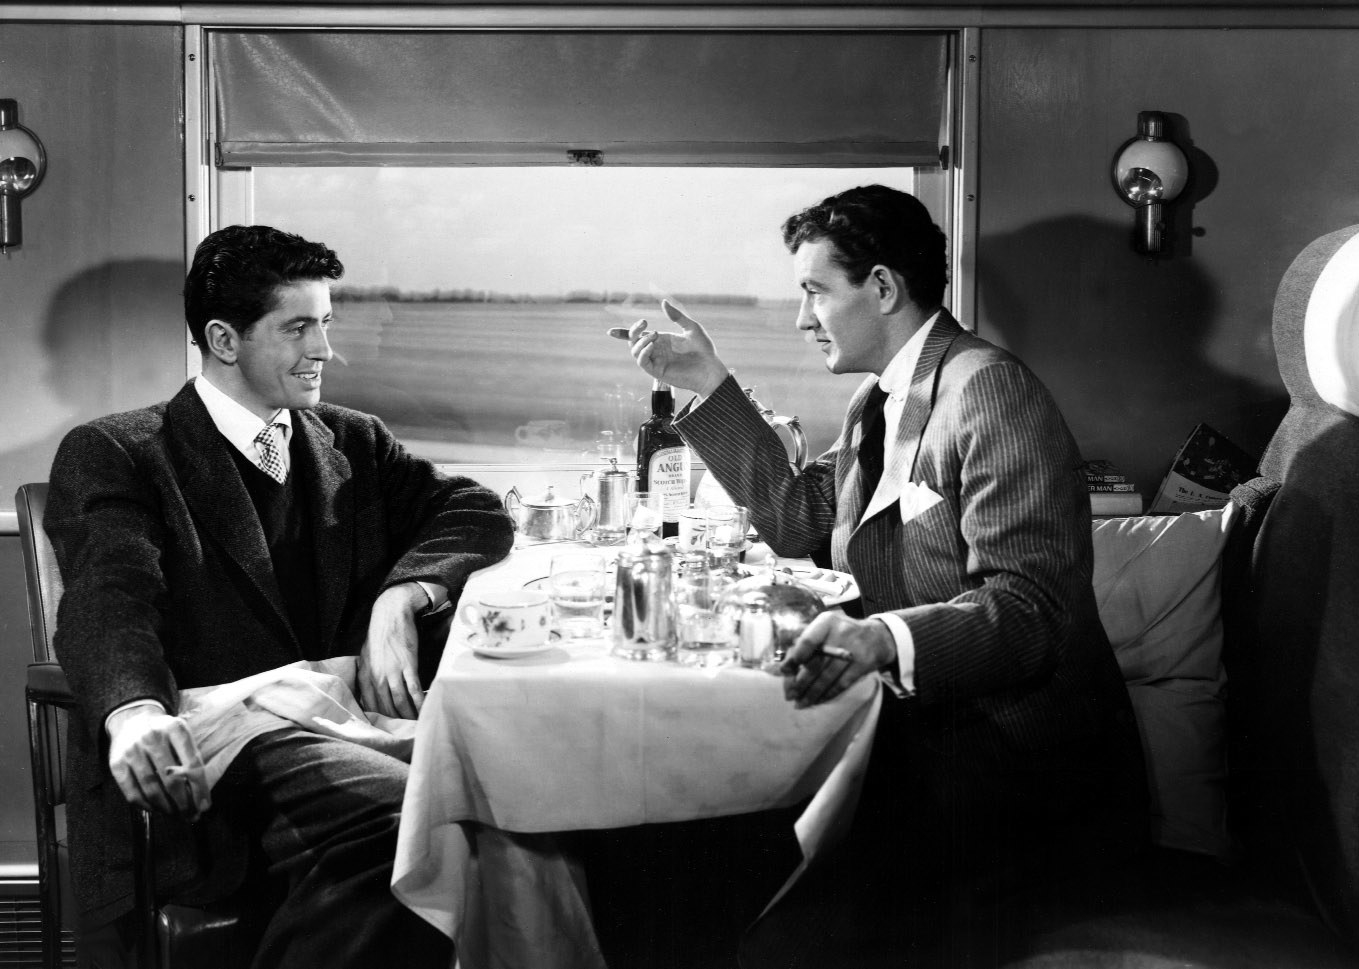 Farley Granger and Robert Walker sitting in a train.